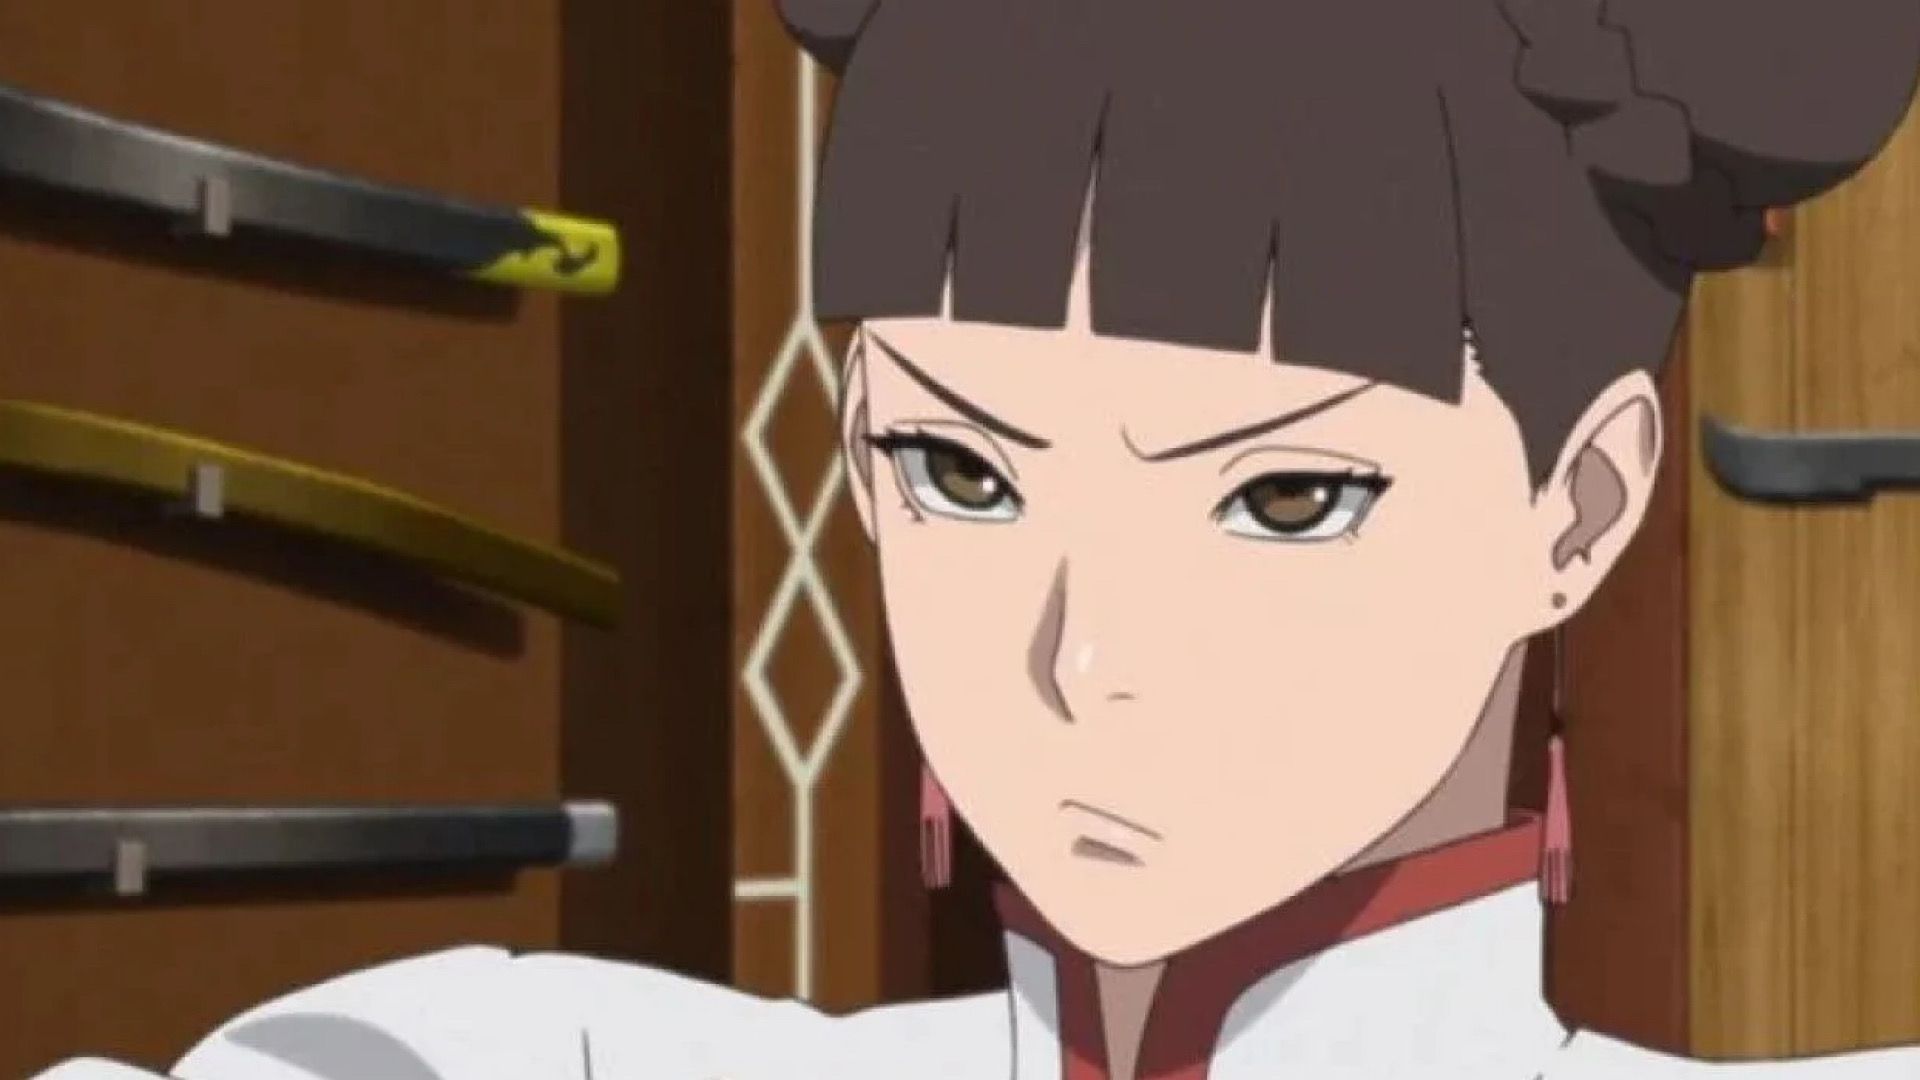 Tenten is a side character in Naruto (Image via Boruto Anime)